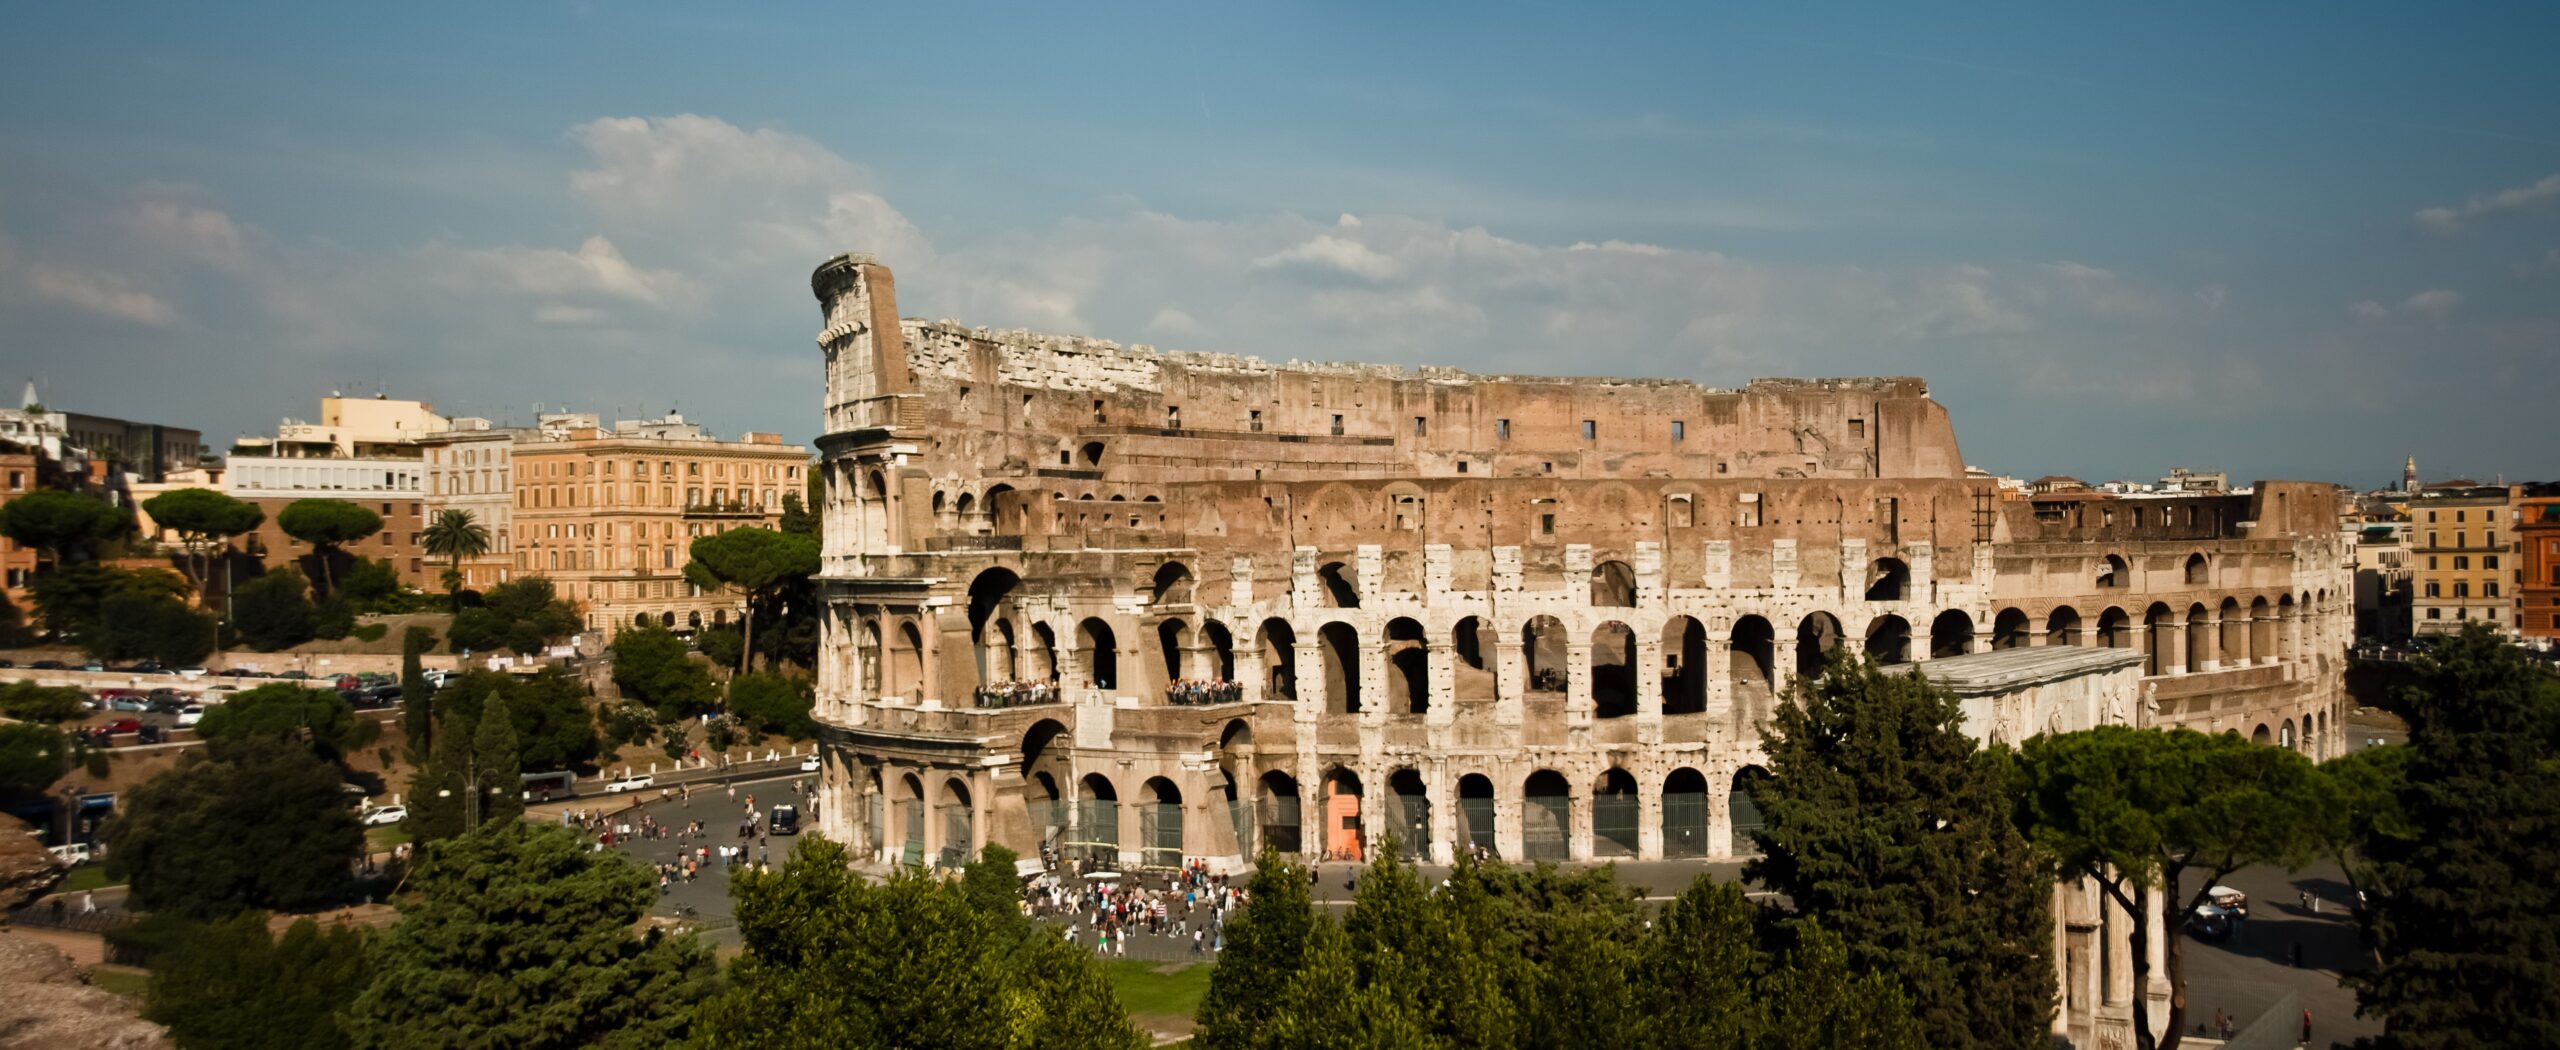 Un week end a Roma: 12 tappe nei luoghi del mistero